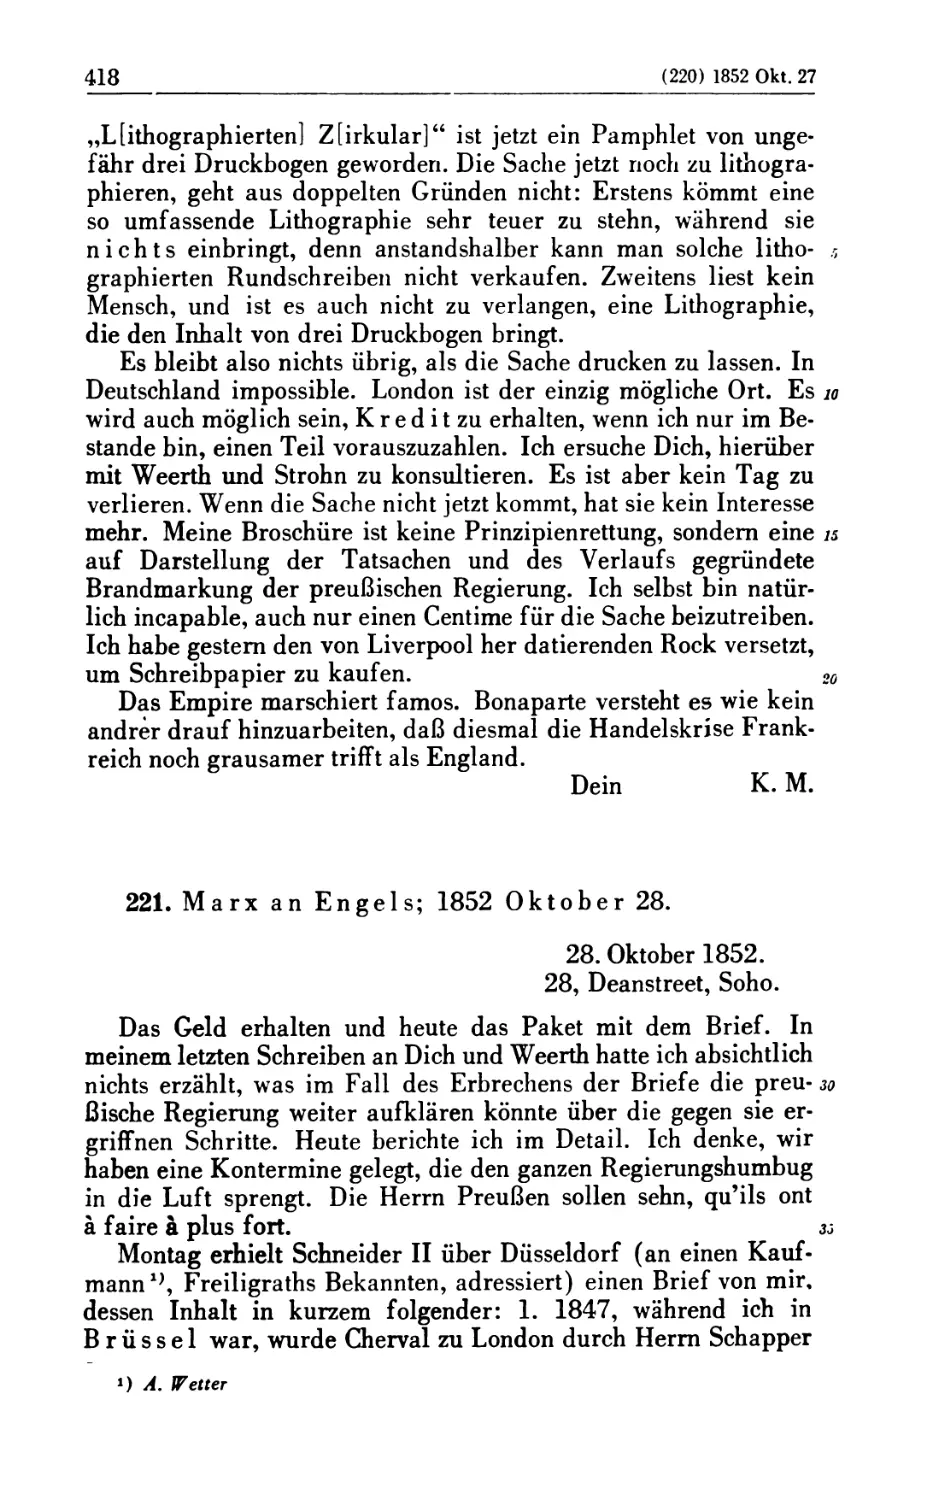 221. Marx an Engels; 1852 Oktober 28